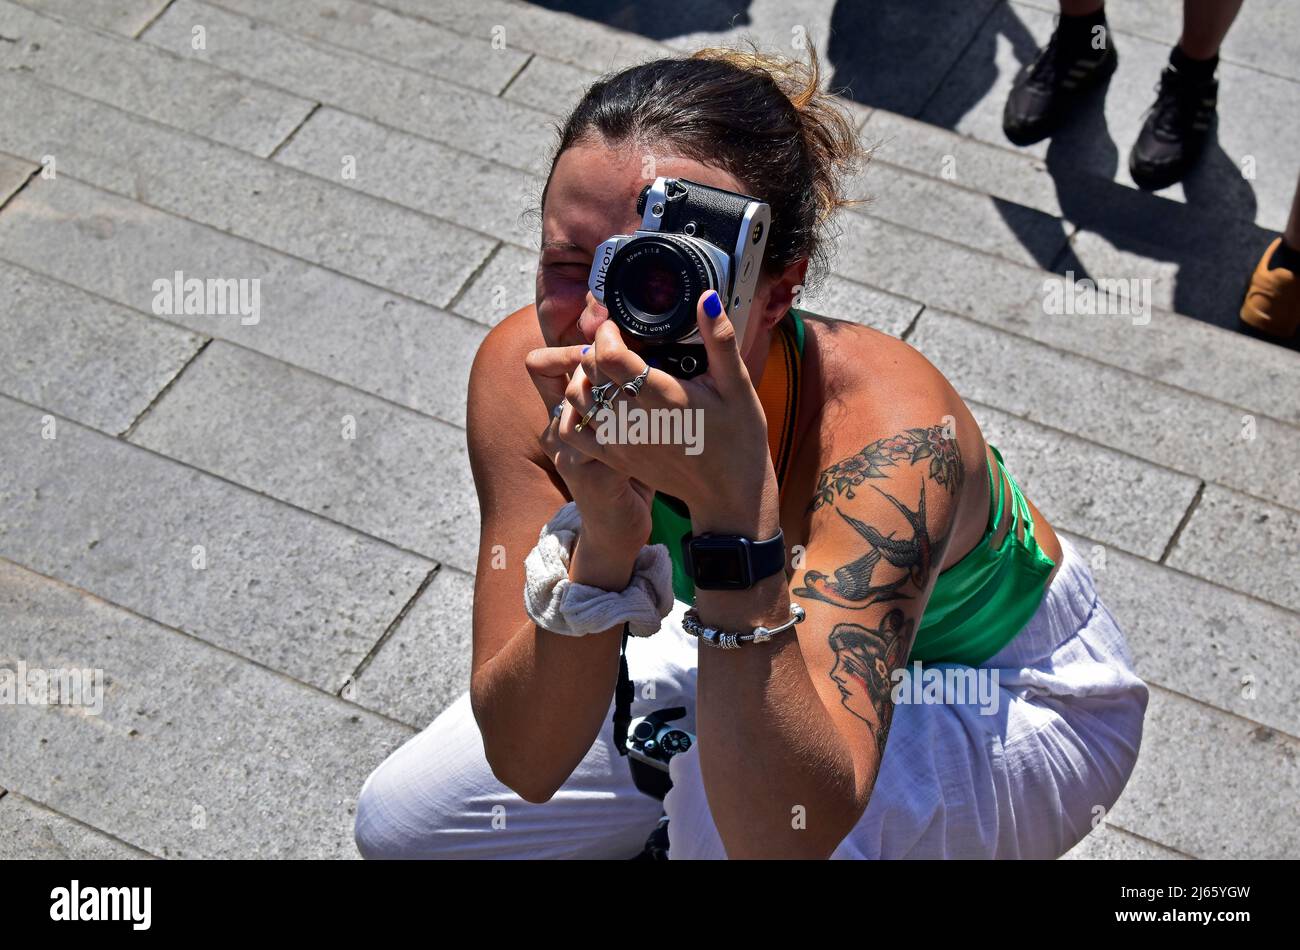 RIO DE JANEIRO, BRASILIEN - 16. MÄRZ 2022: Junge brasilianerin fotografiert vor Ort Stockfoto